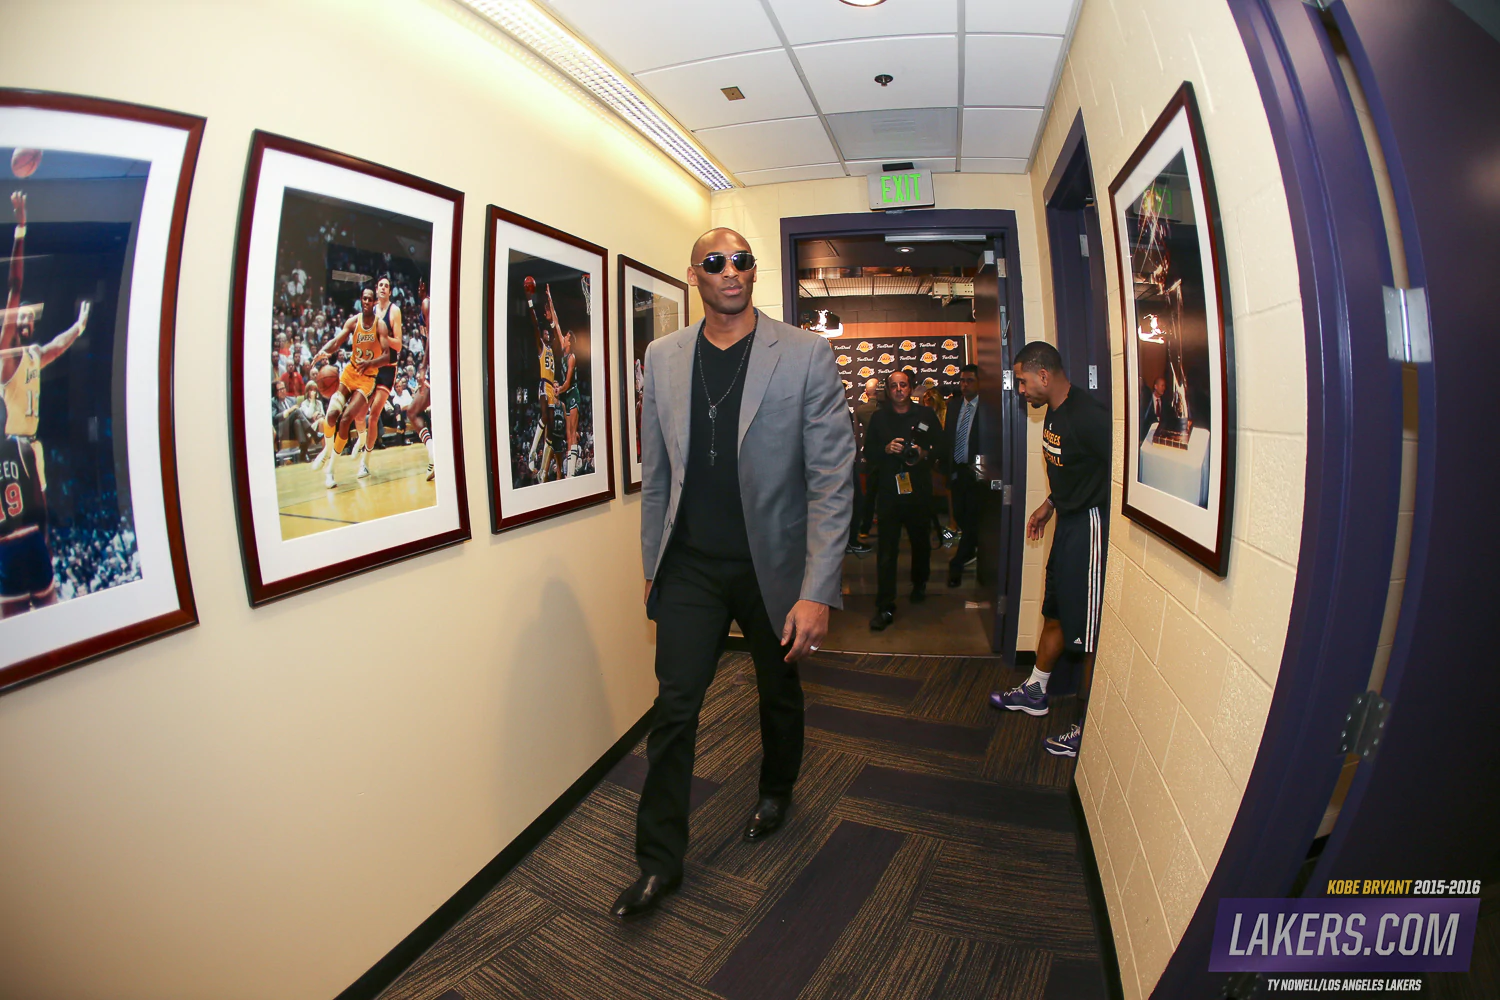 A Season In Photos: Kobe Bryant's 20th